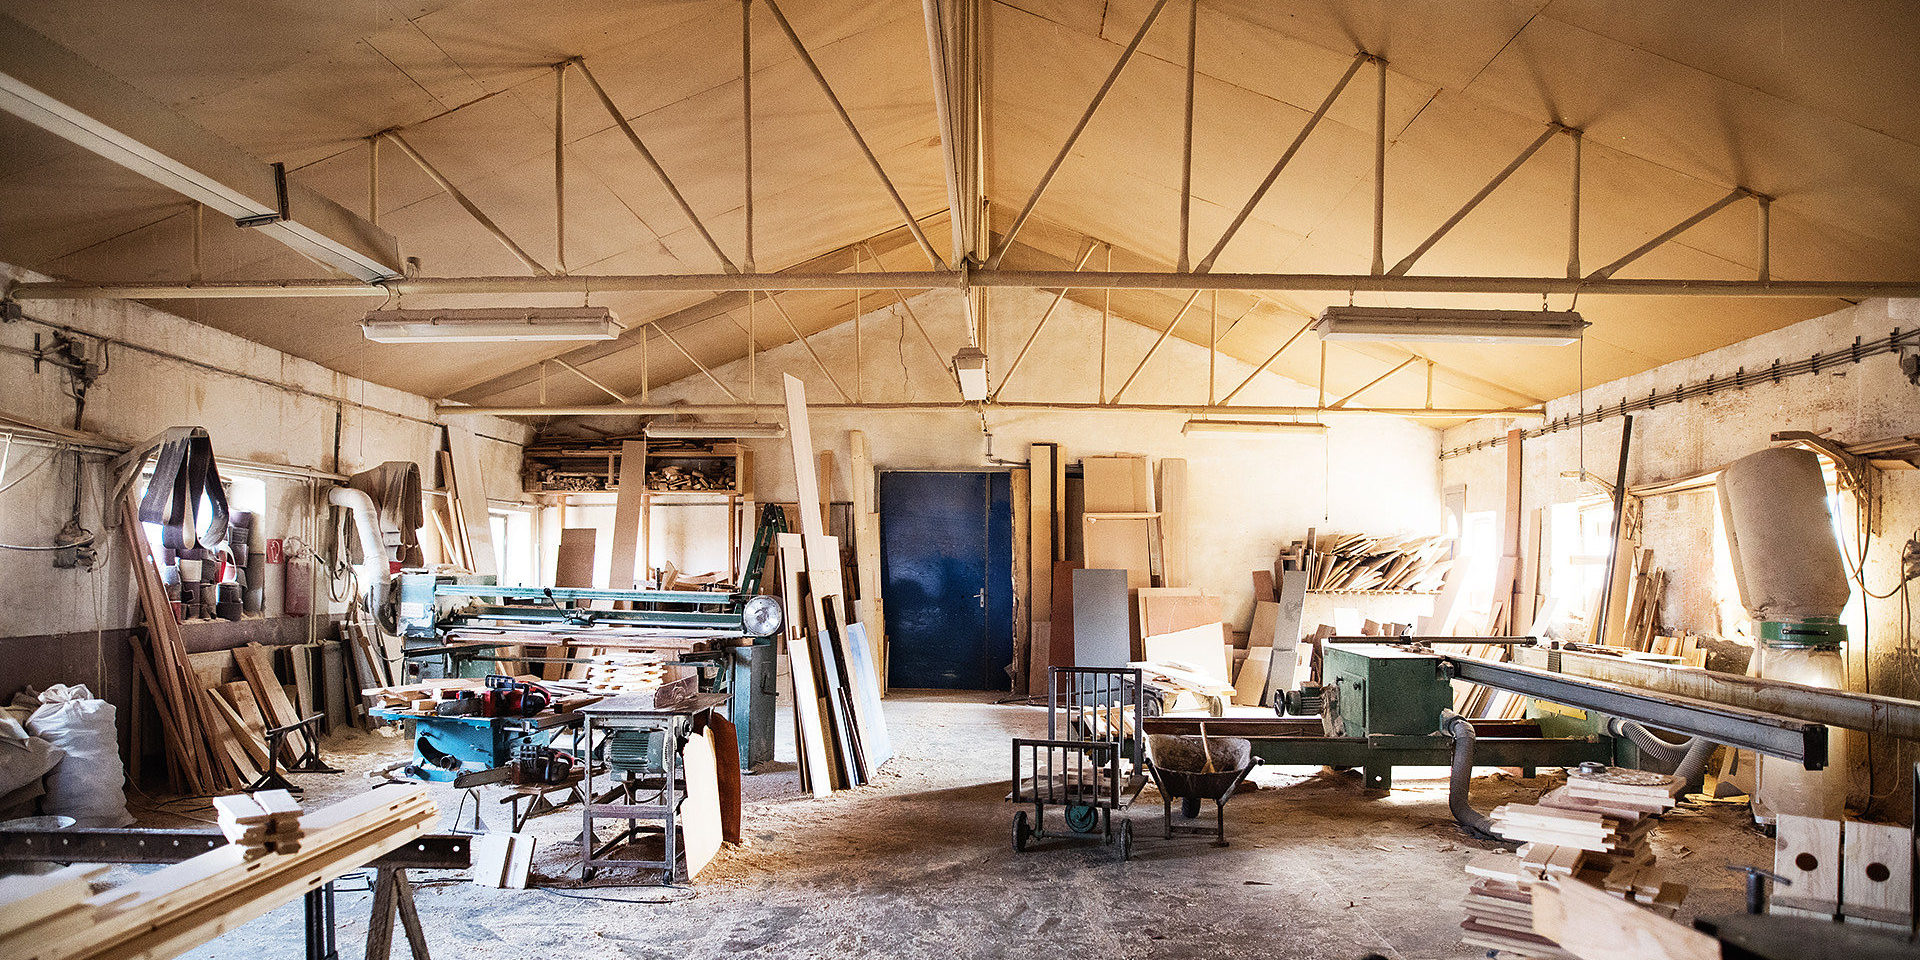 An interior of a big carpentry workshop.